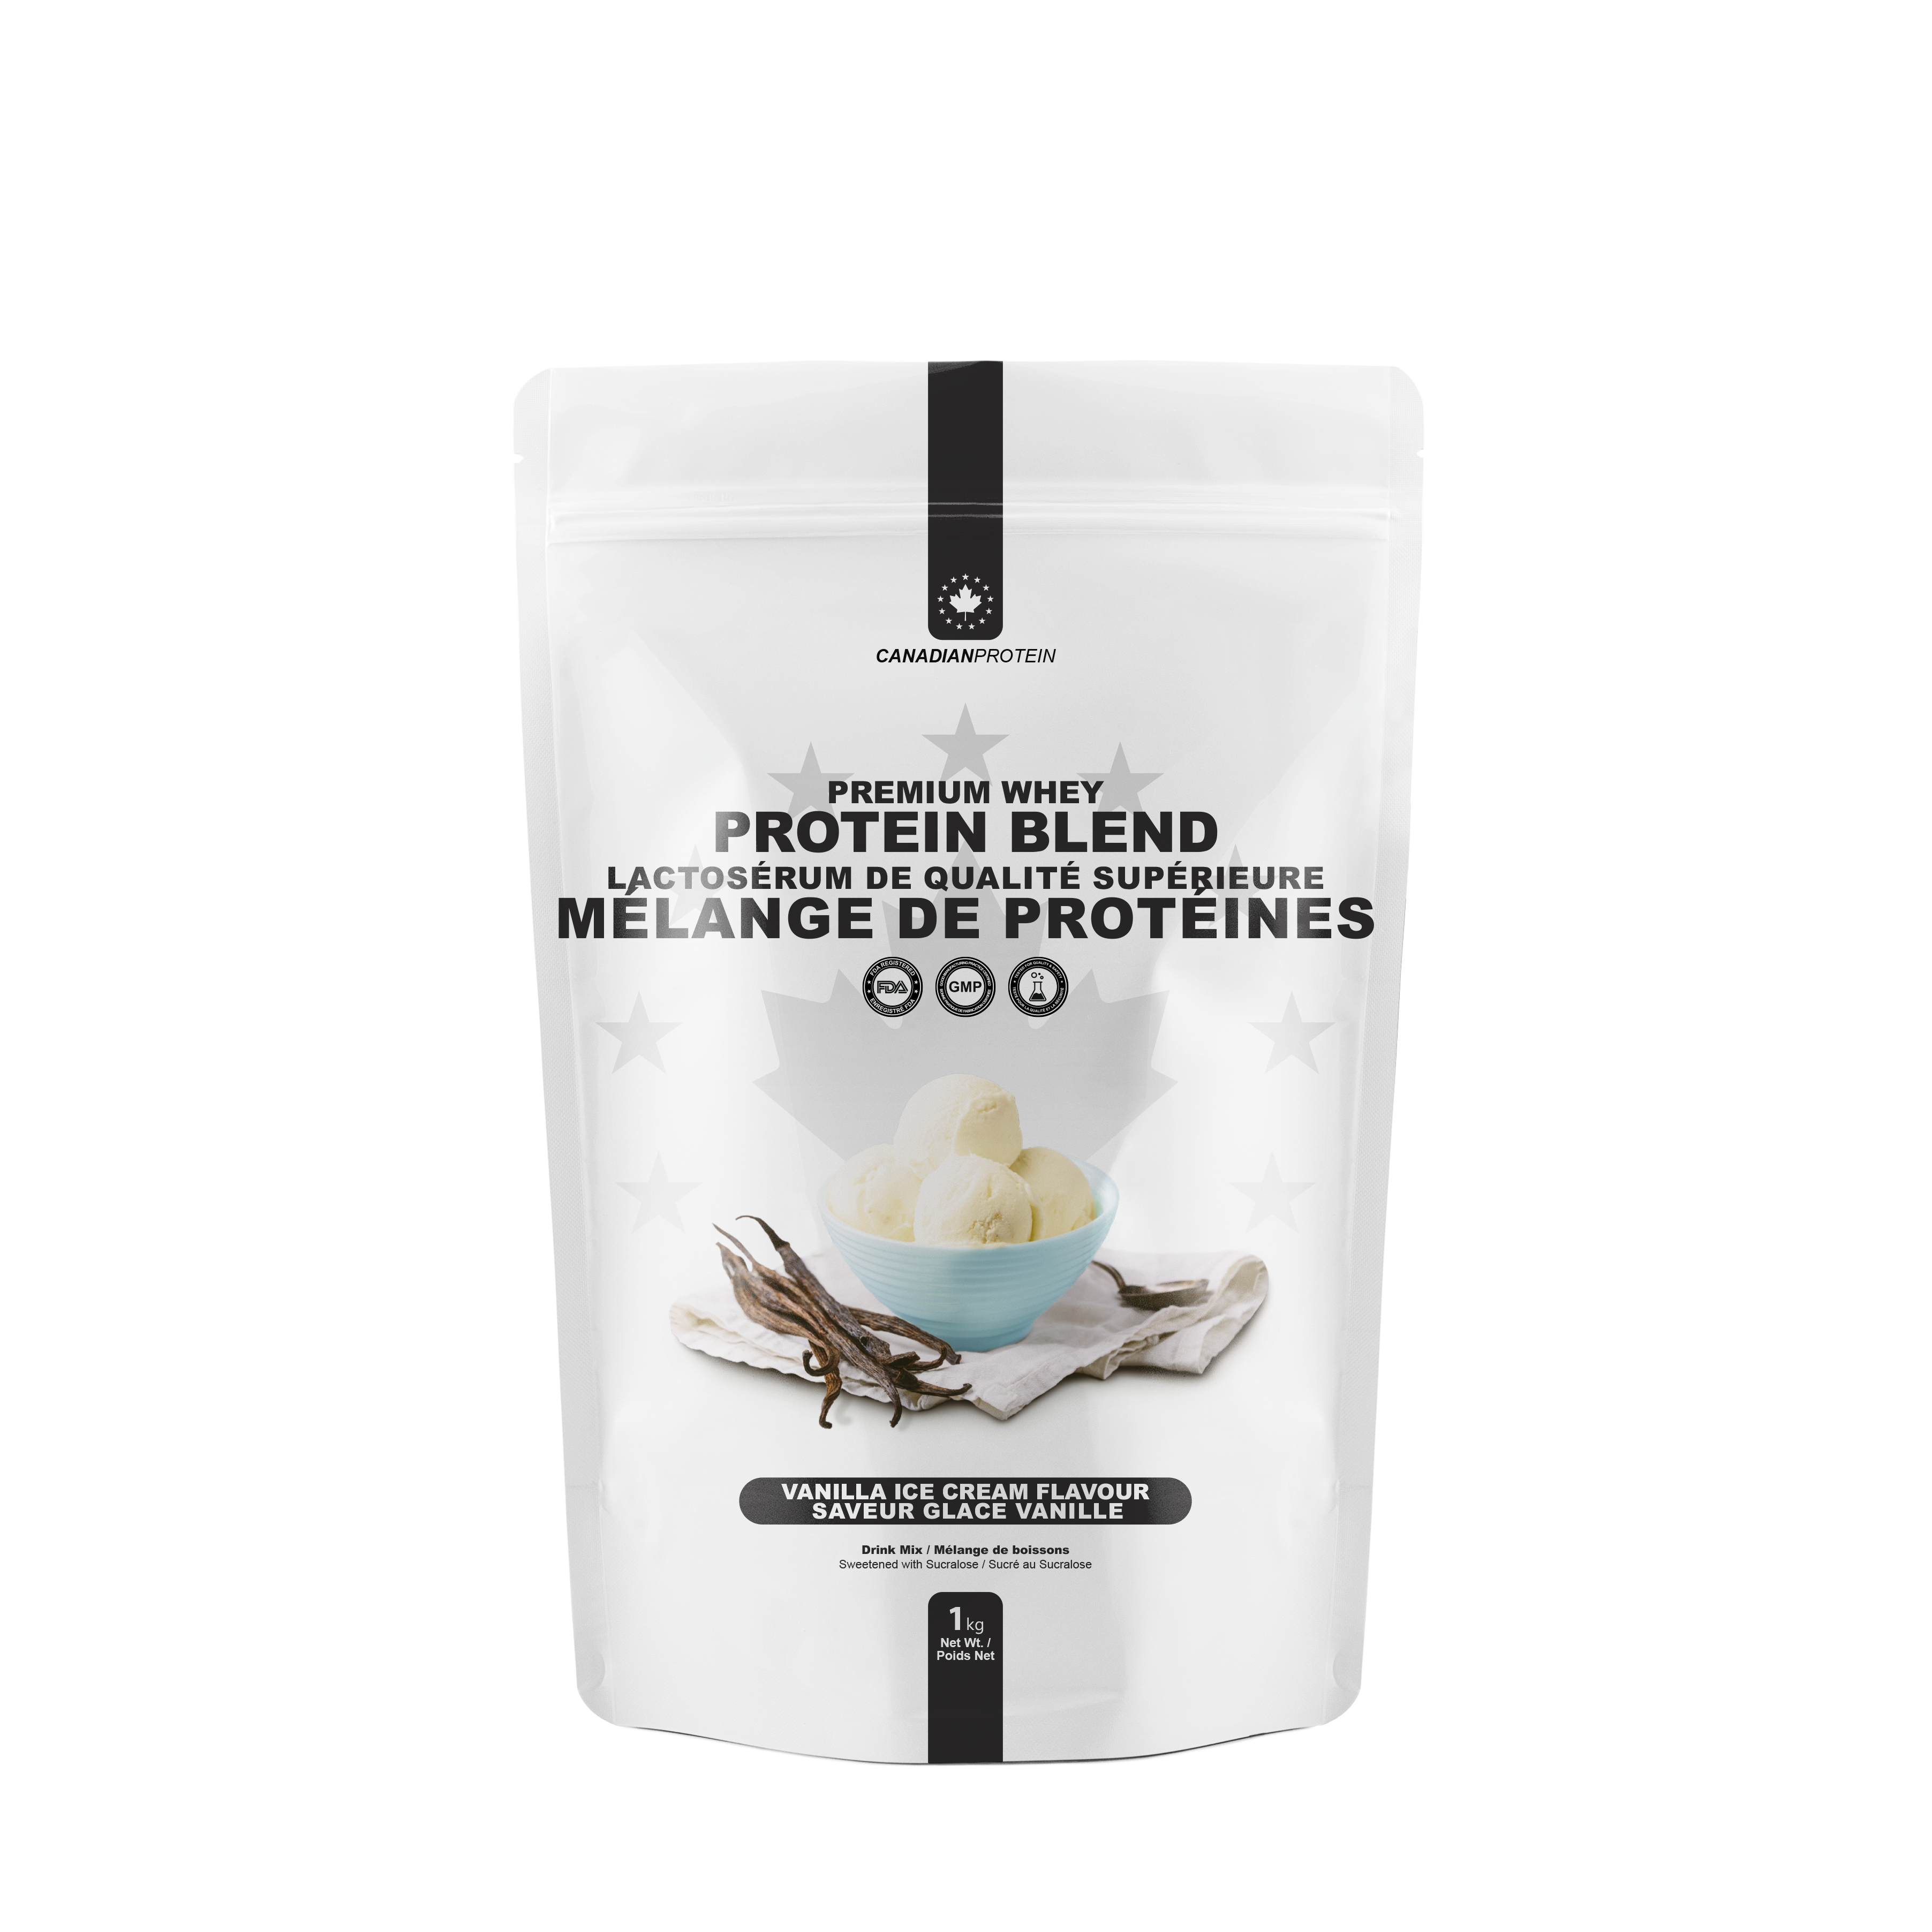 Limited Edition Vanilla Ice Cream Premium Whey Protein Blend